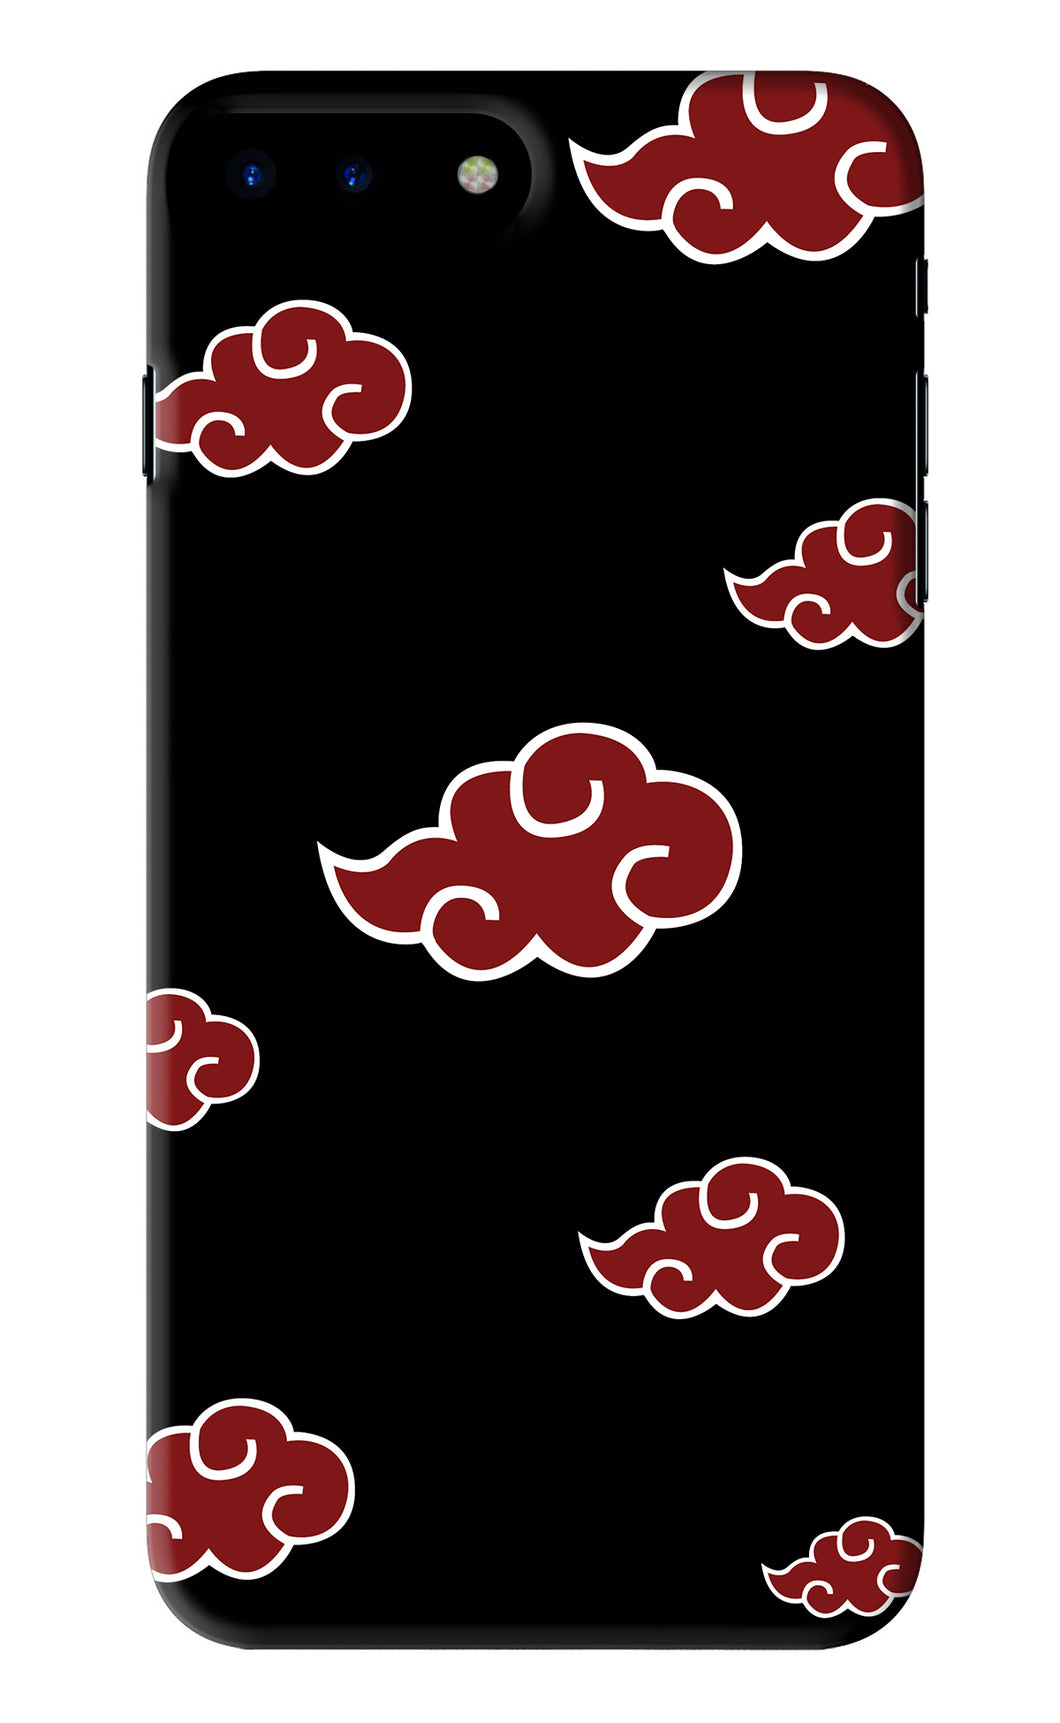 Akatsuki iPhone 8 Plus Back Skin Wrap